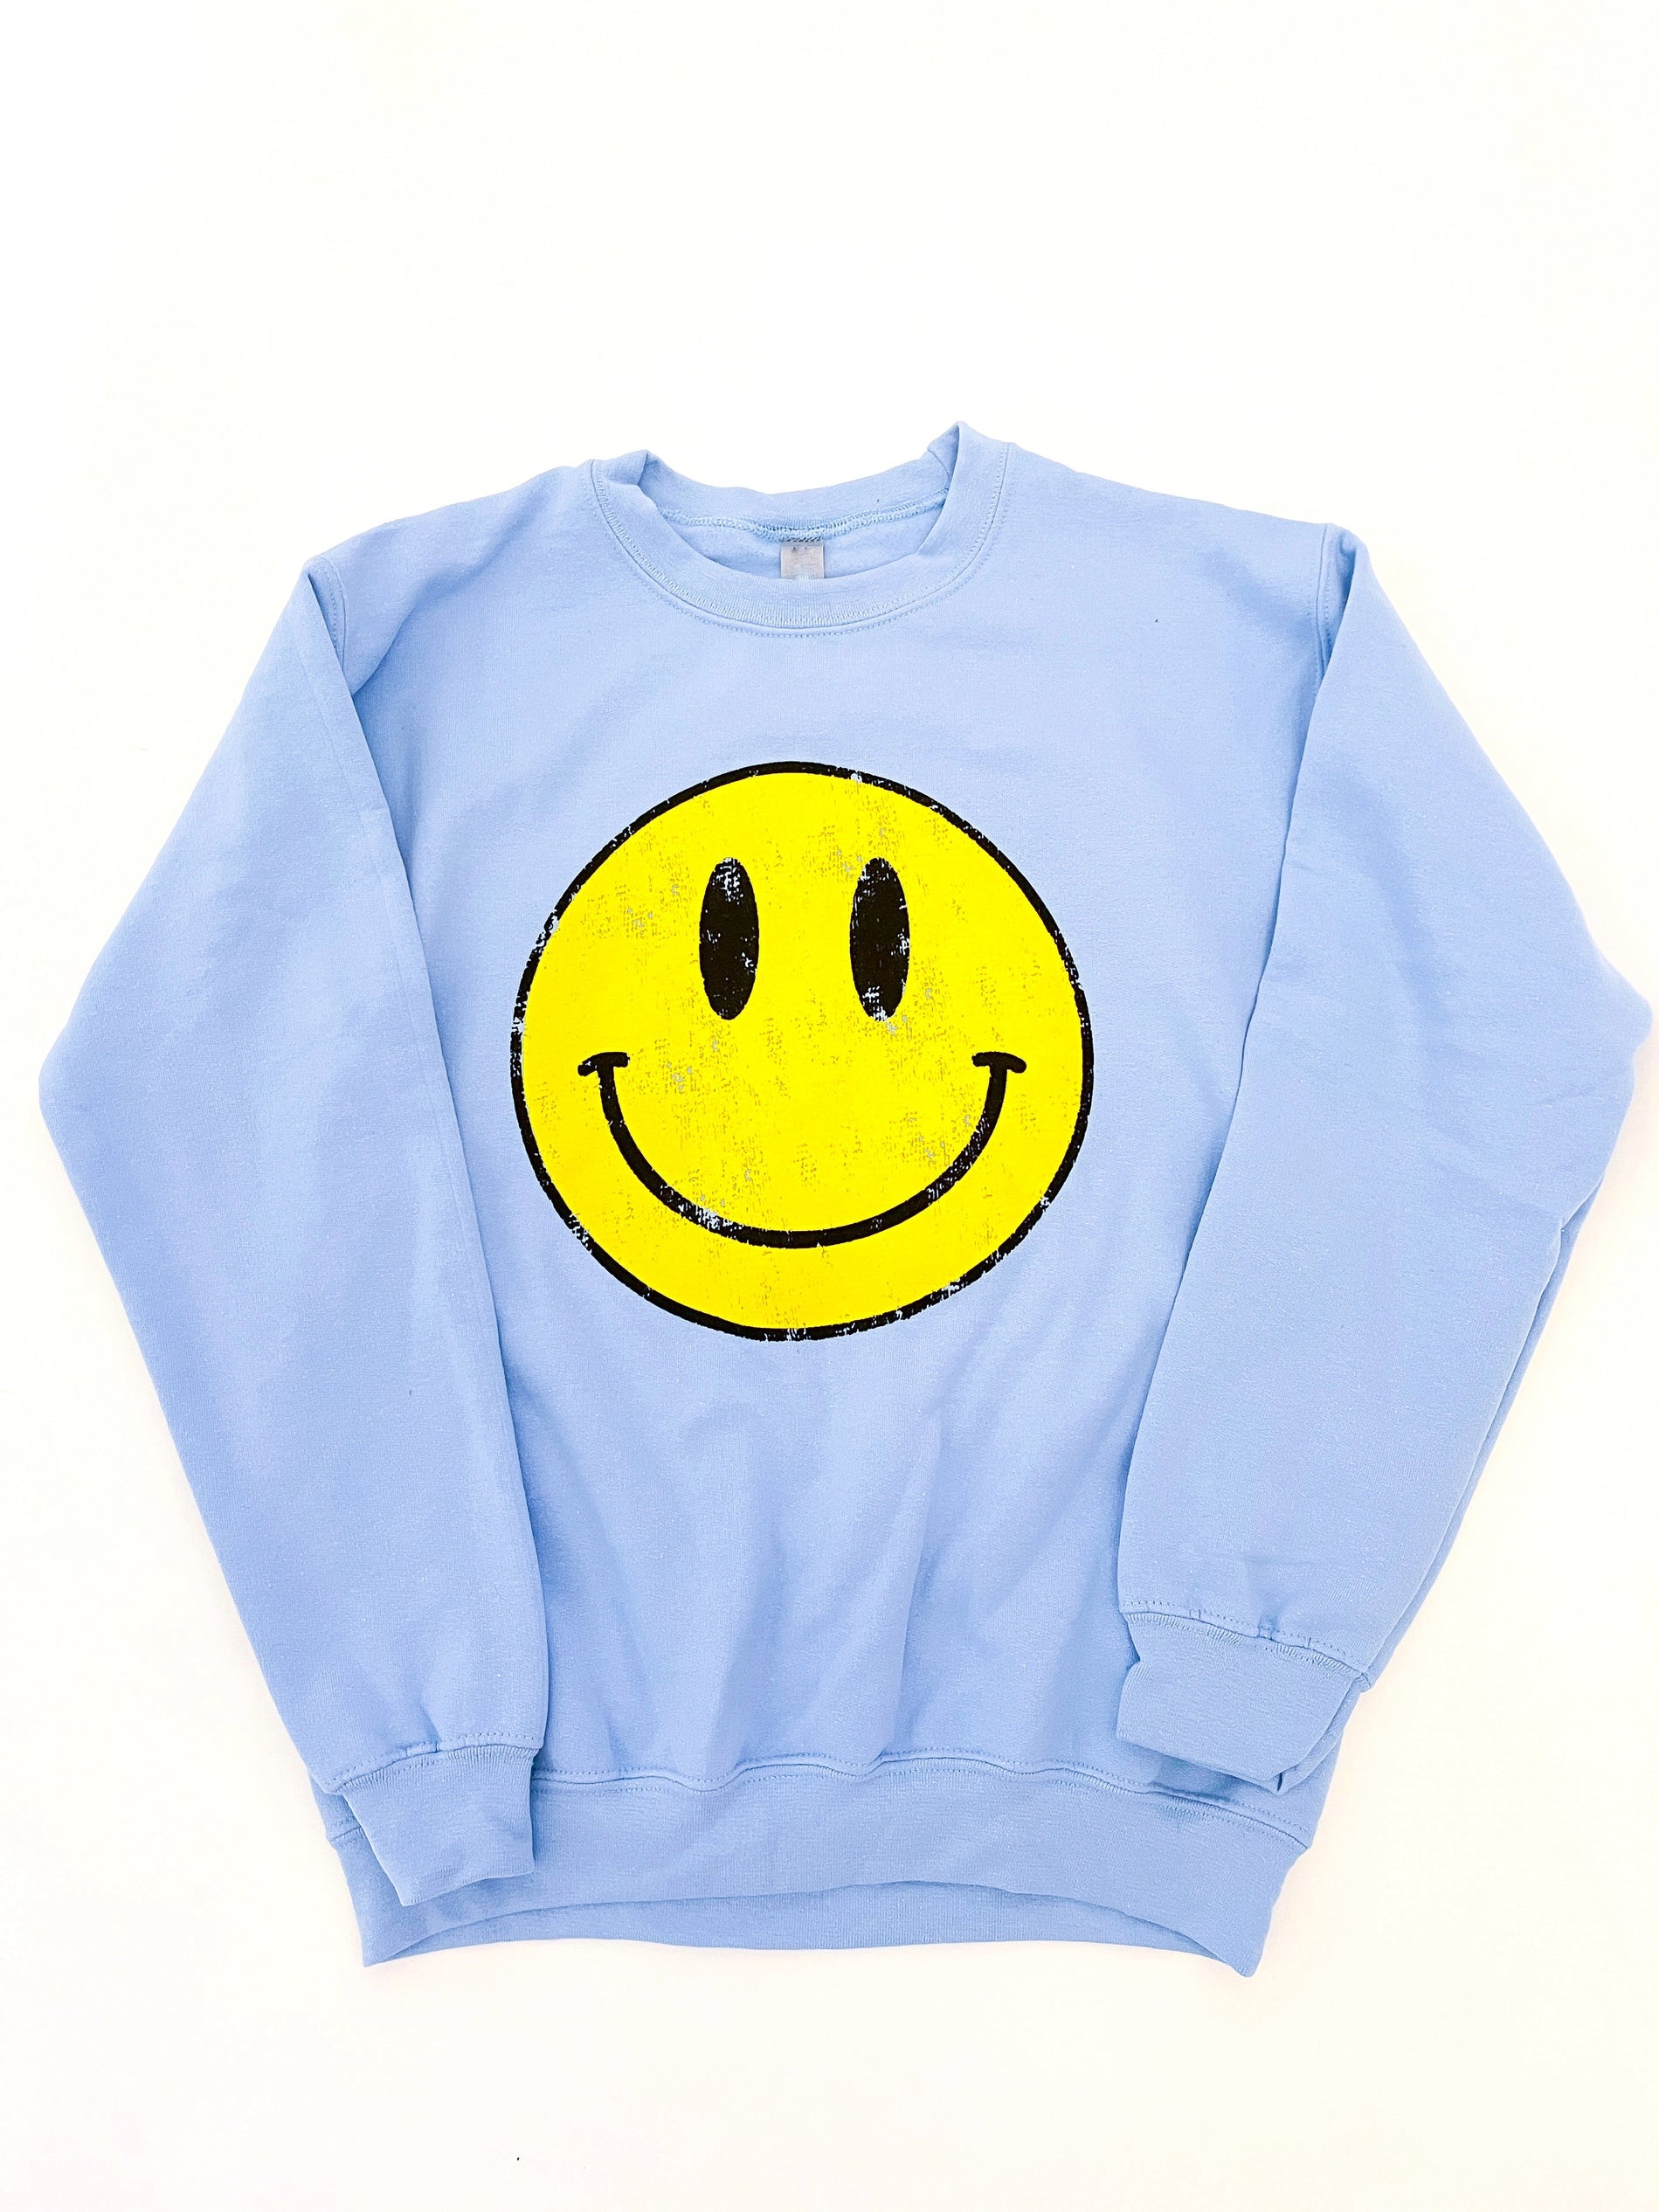 LuLuBleuBoutique Embroidered Smiley Face Tie Dye Comfort Colors Sweatshirt, Happy Face Vintage Sweatshirt